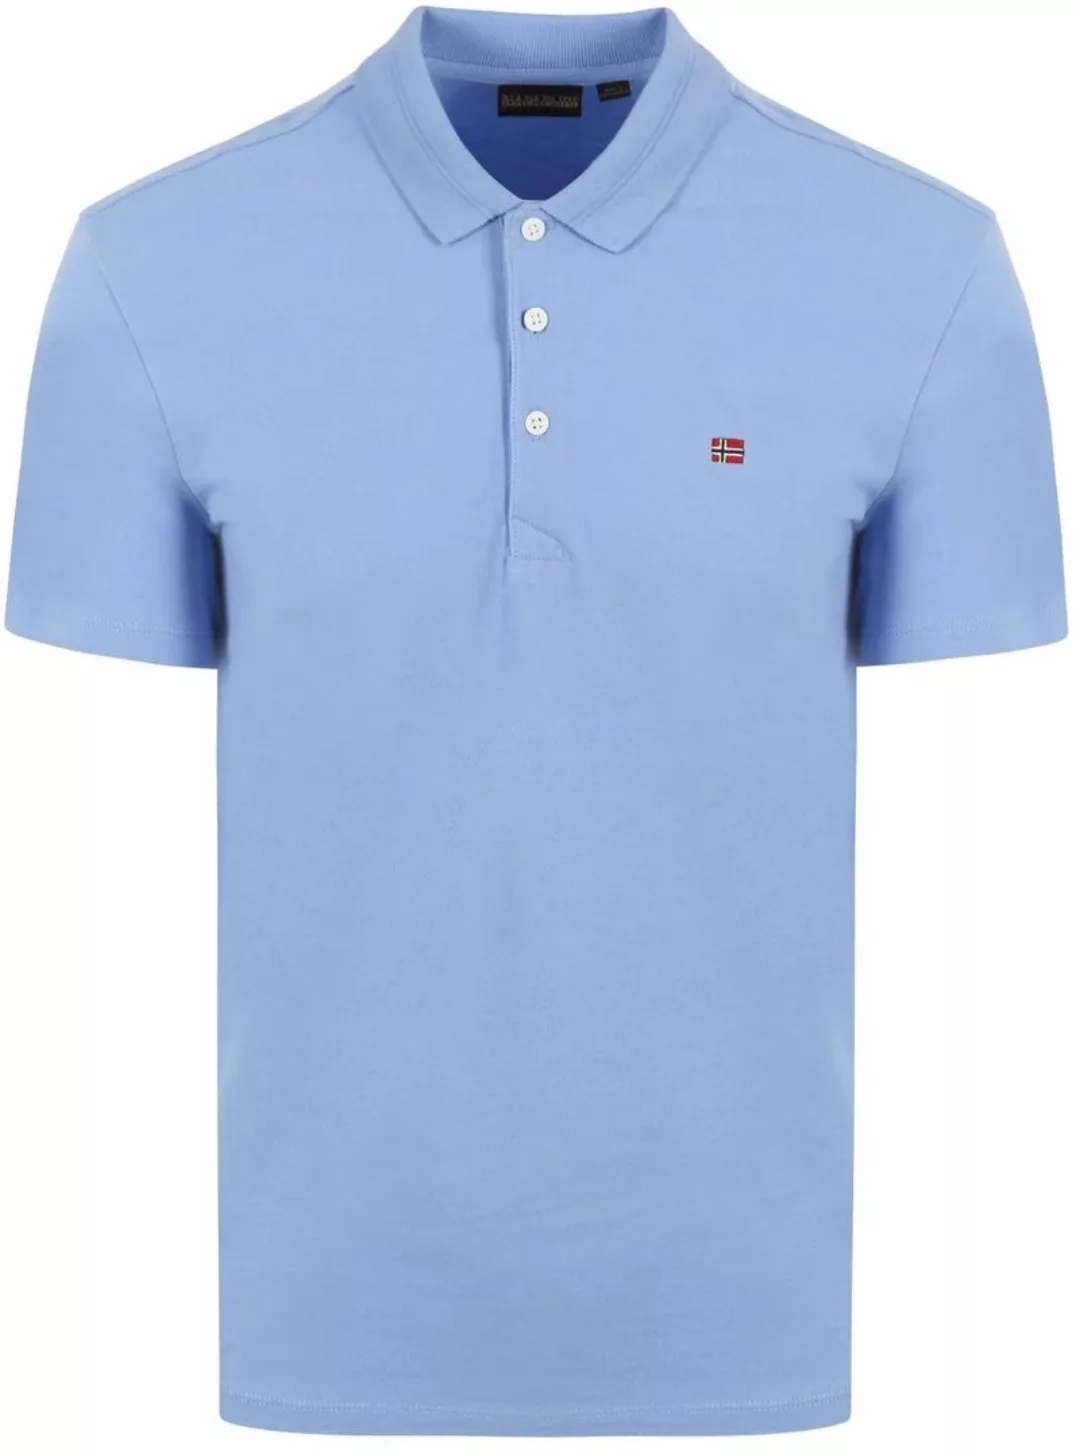 Napapijri Ealis Poloshirt Hellblau - Größe XL günstig online kaufen